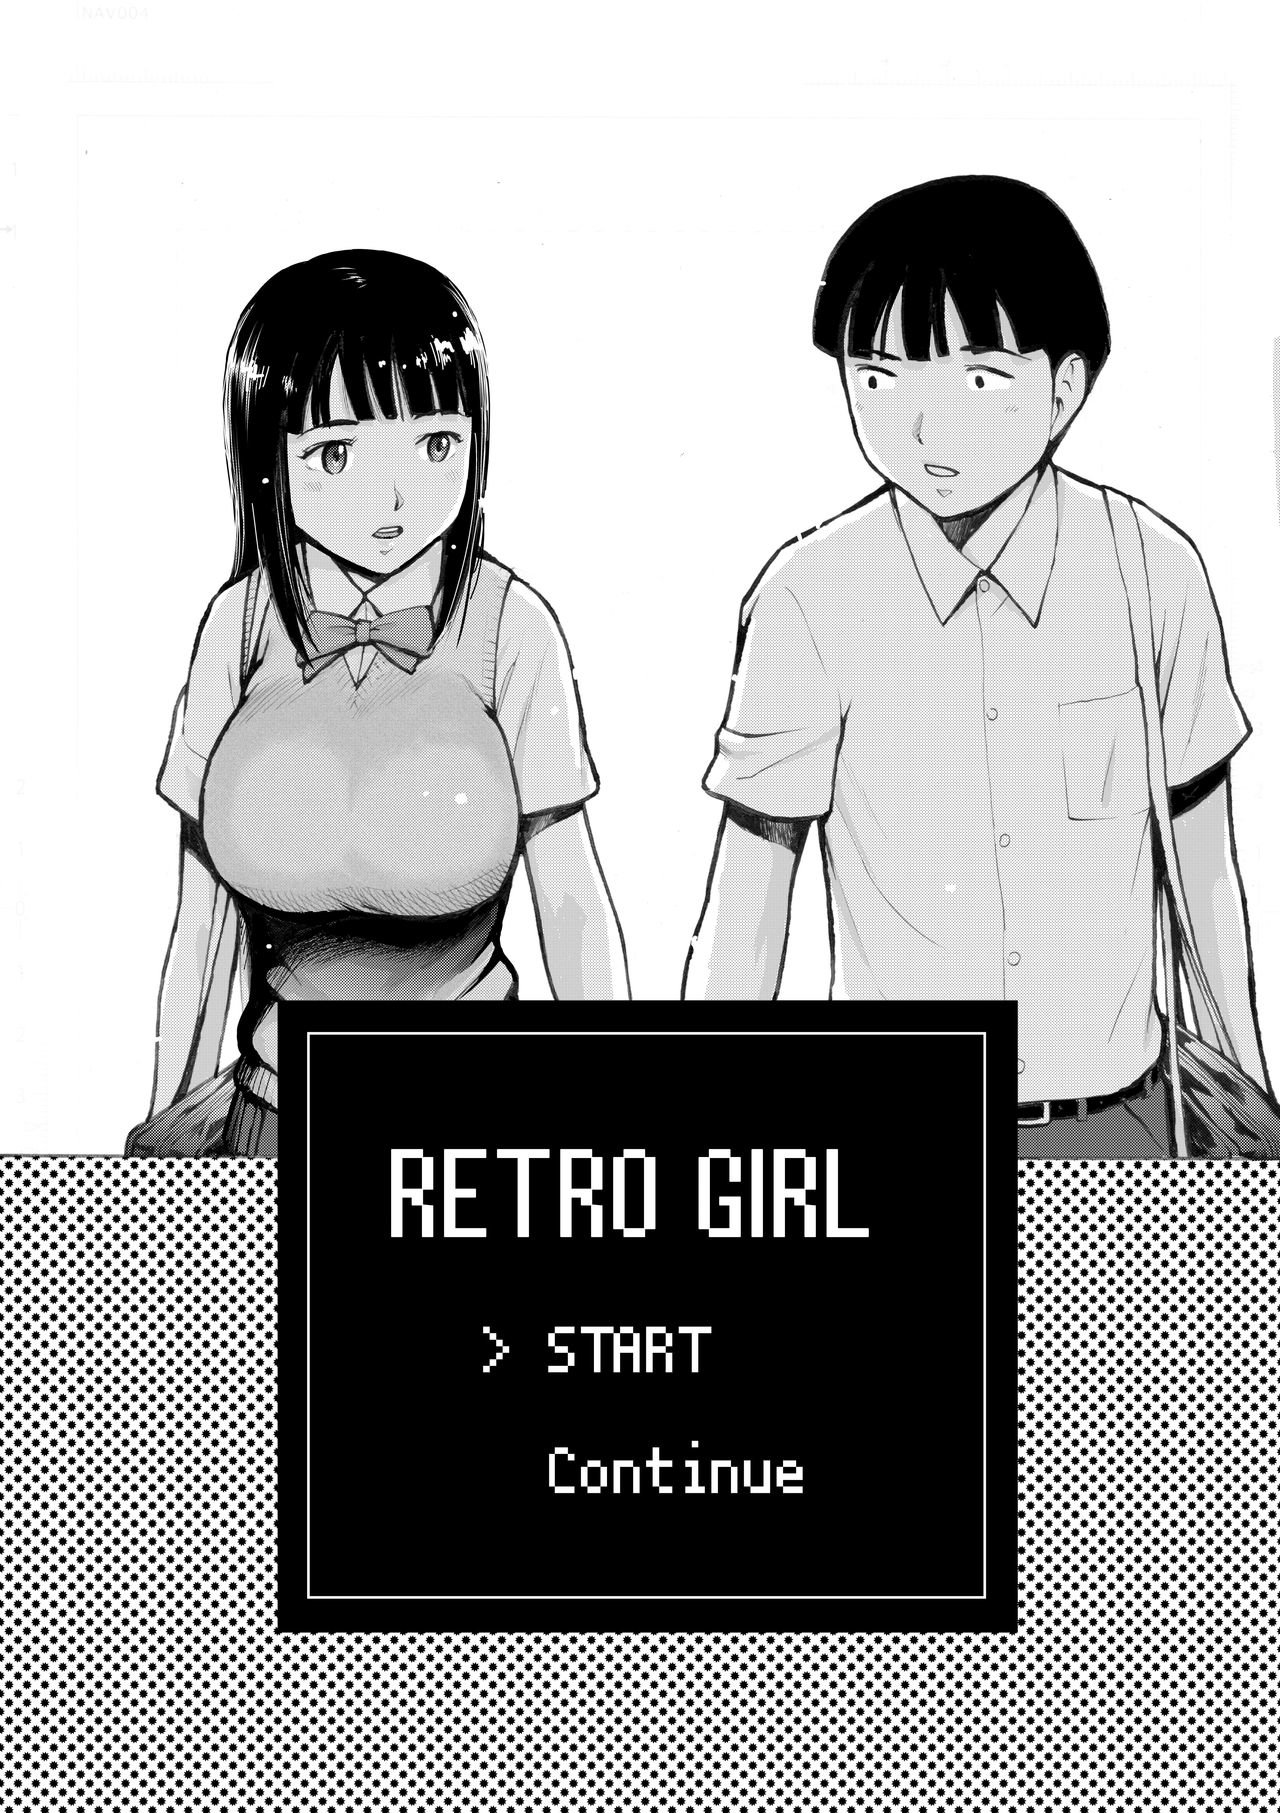 Retro Girl - 2